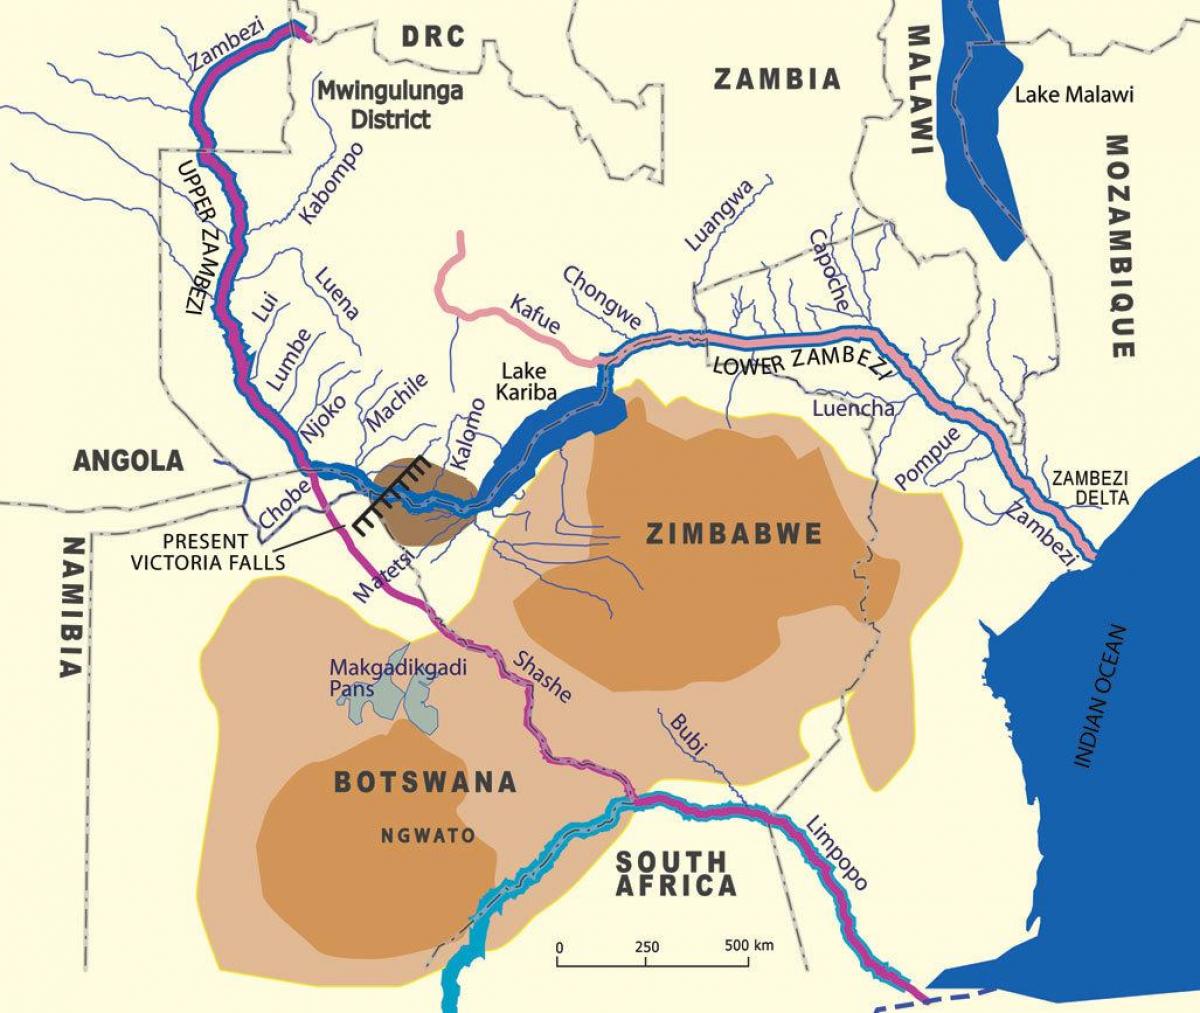 Kartta geologinen zambi